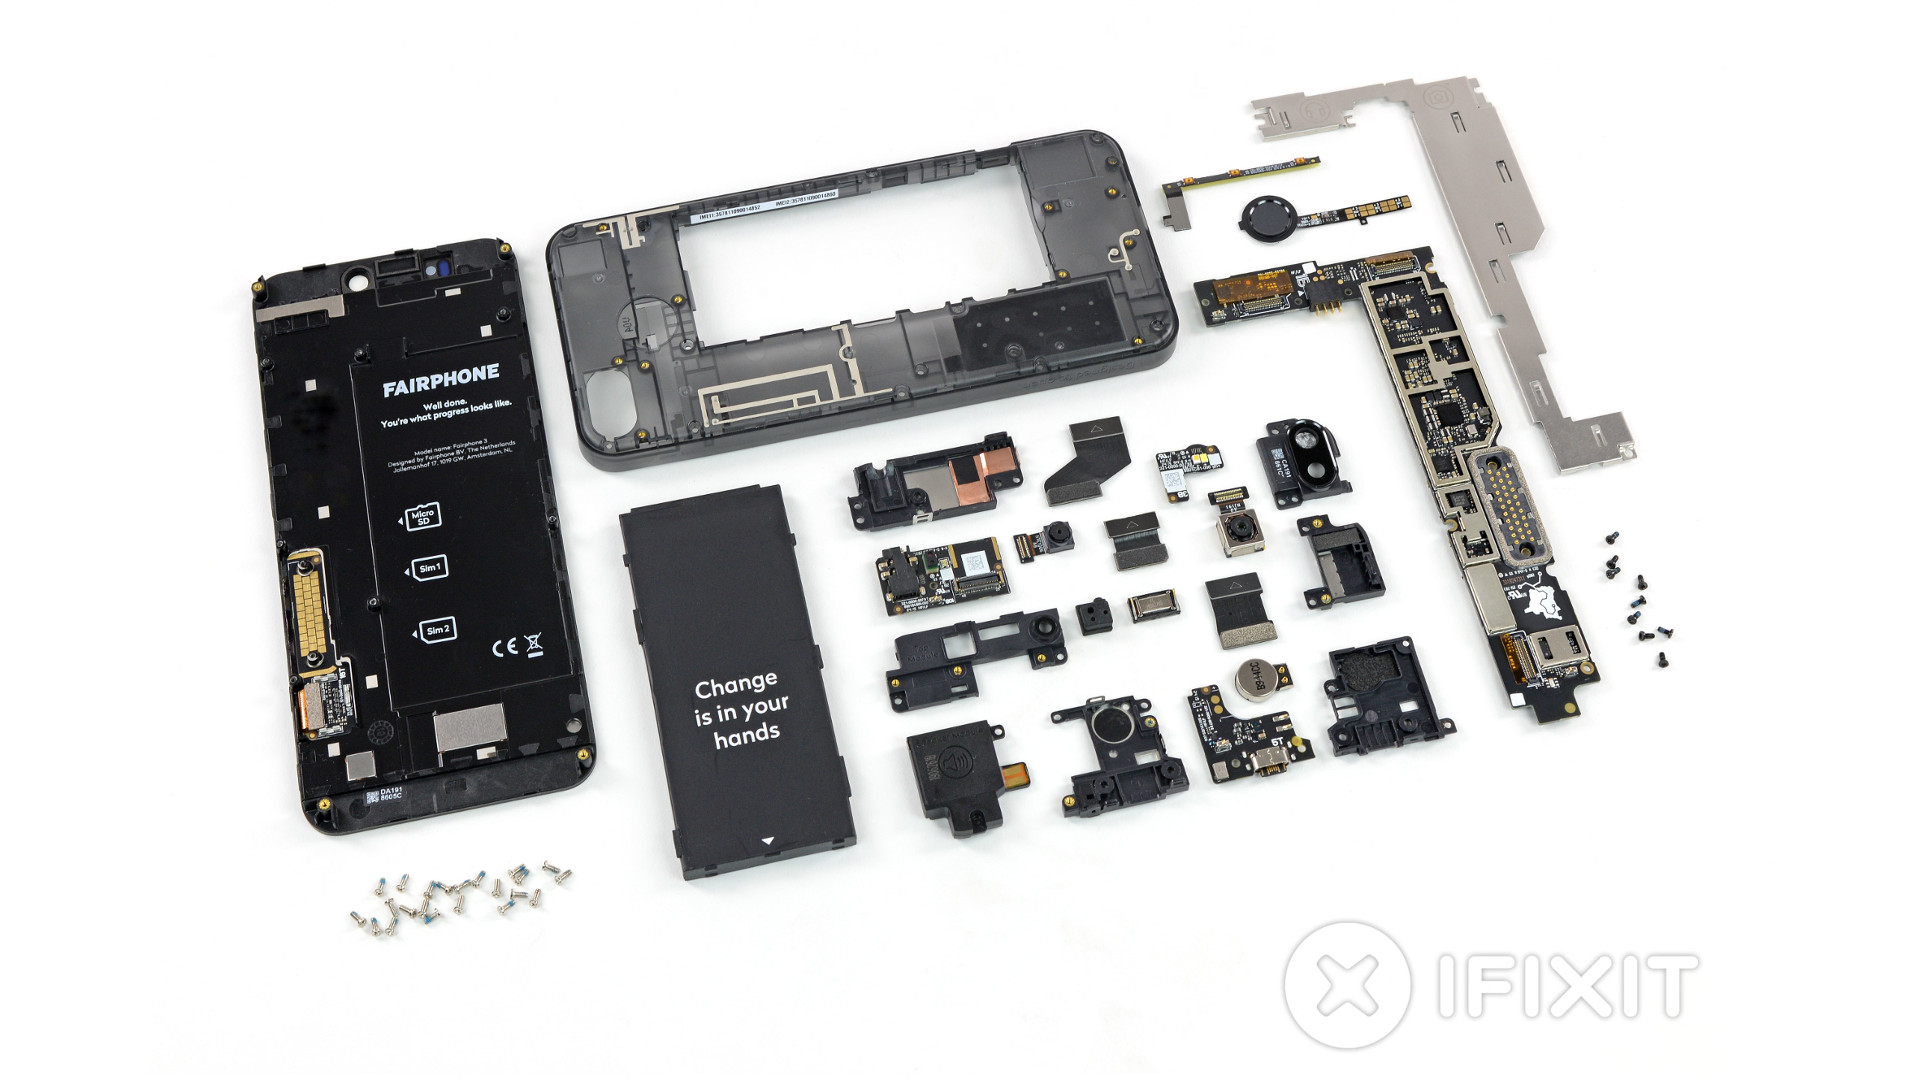 The Fairphone 3 teardown via iFixit.